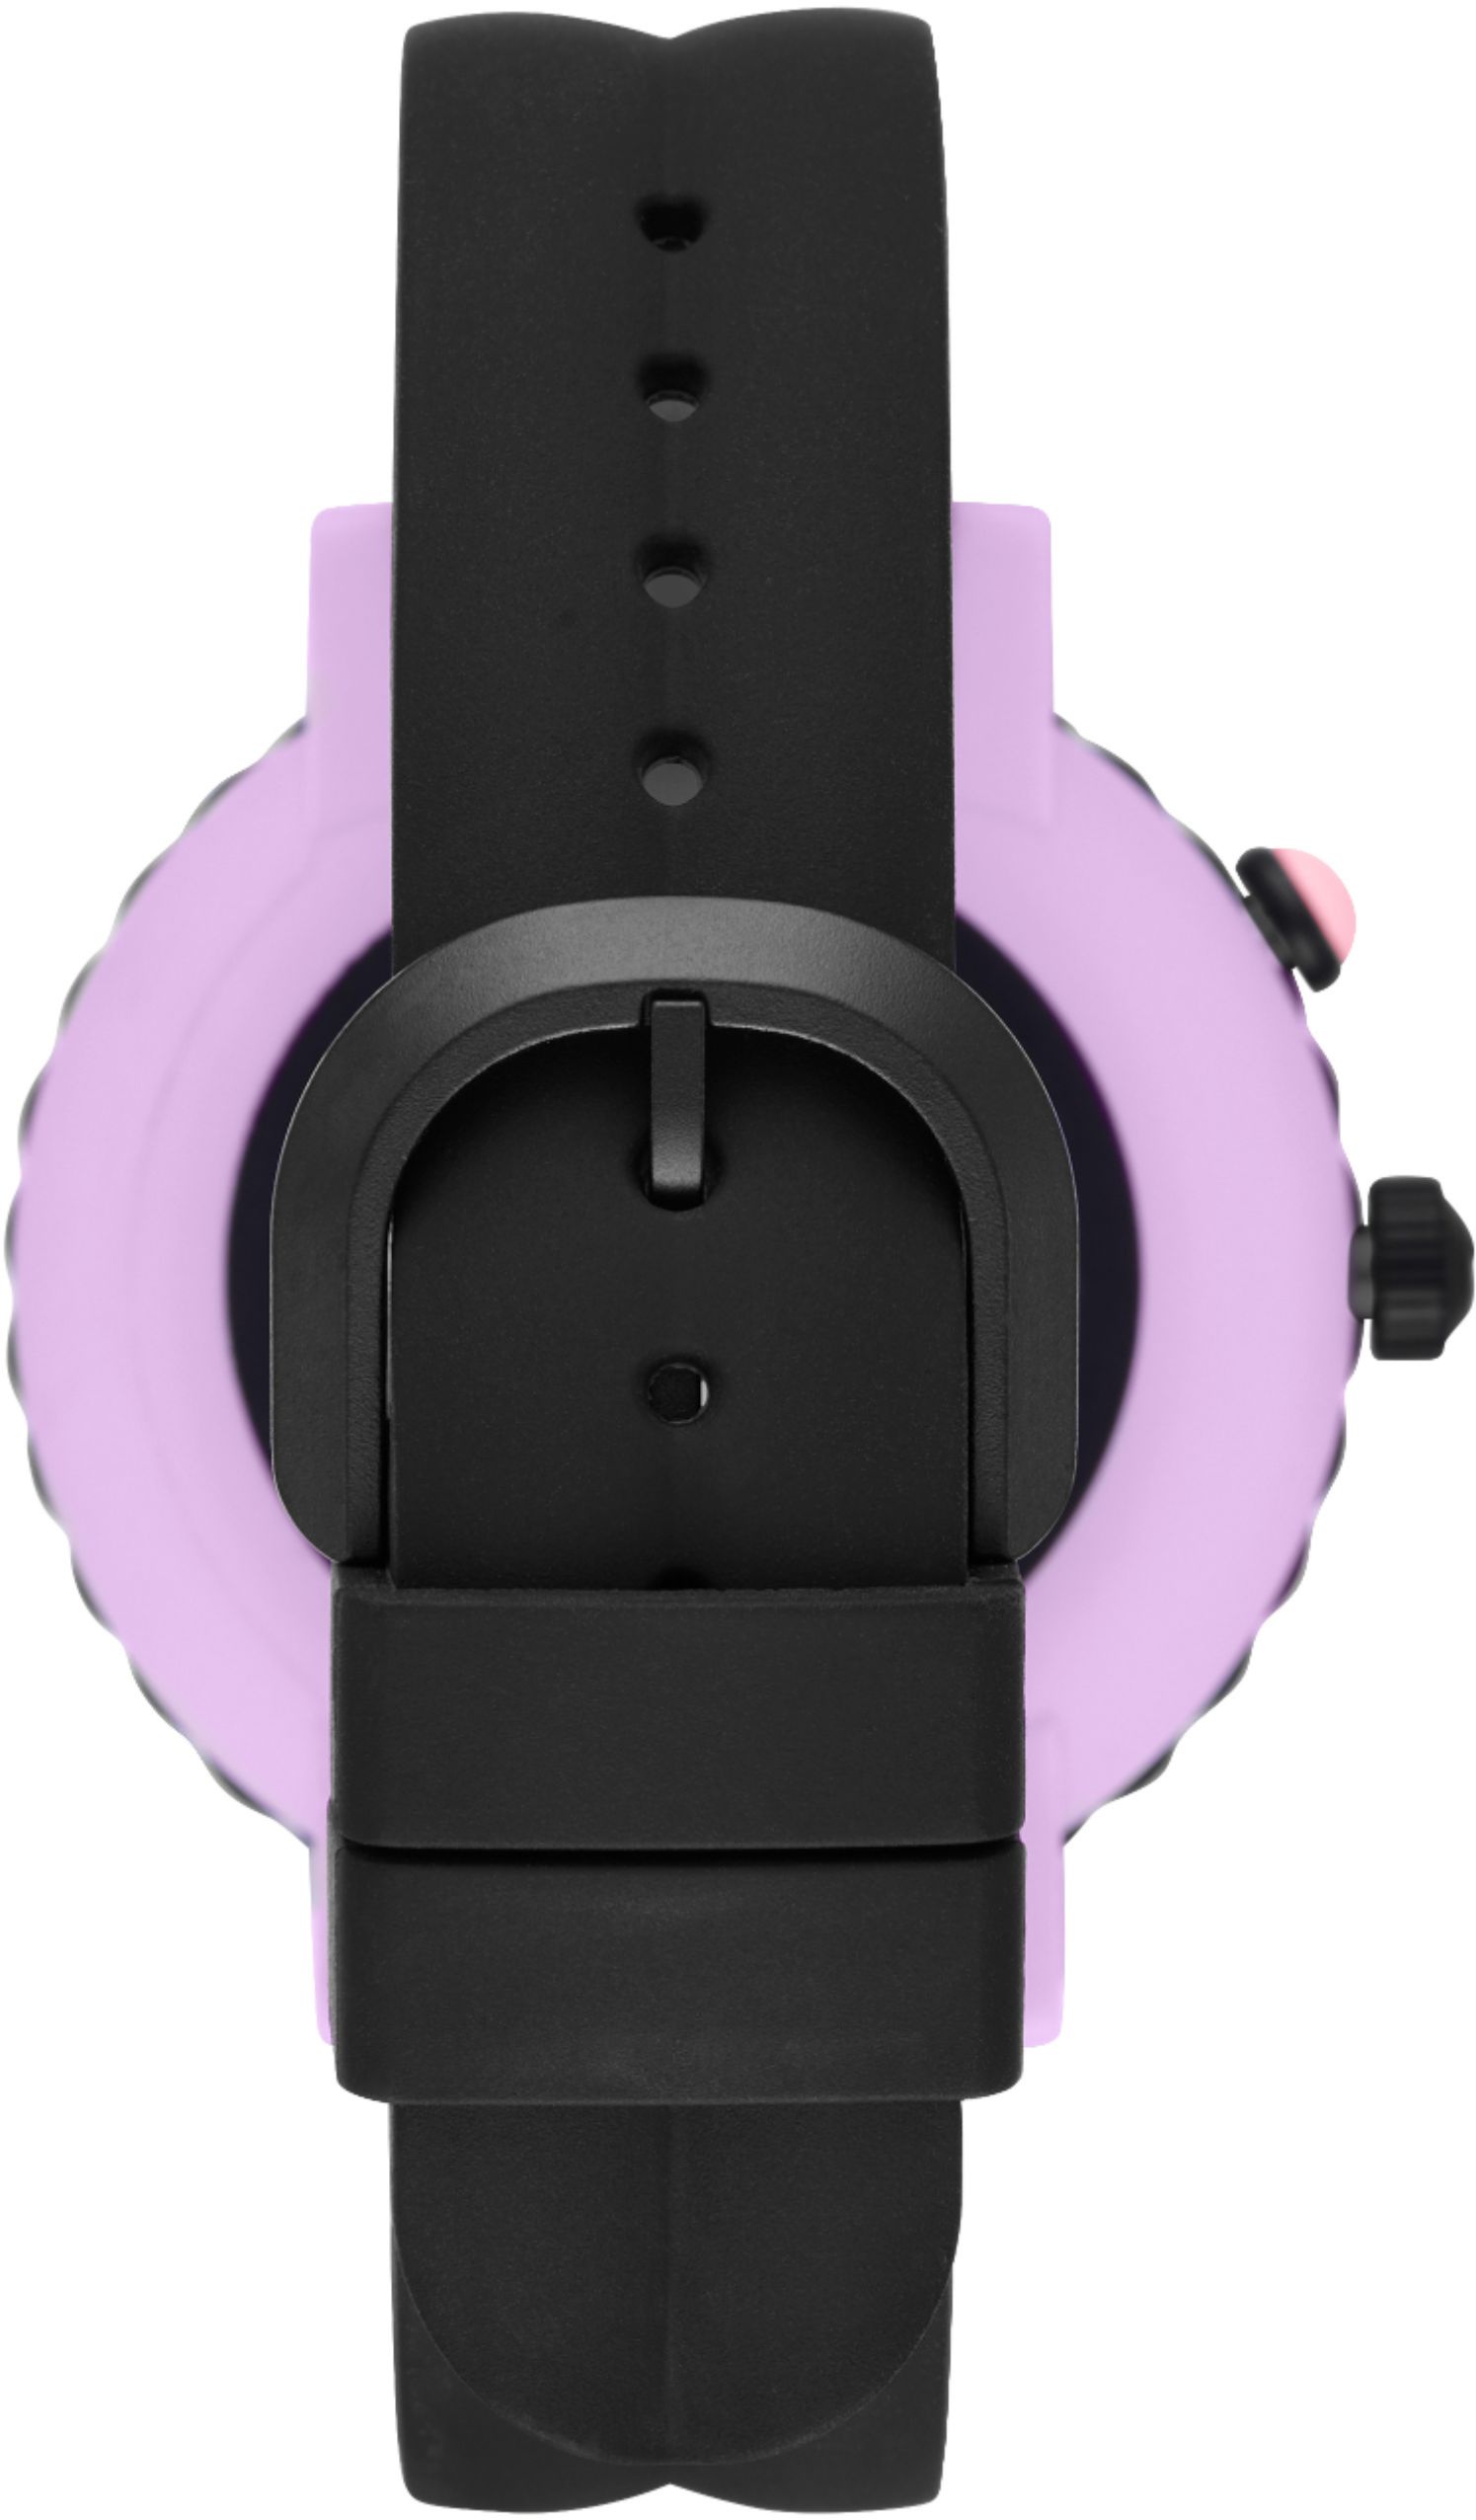 Back View: Modal™ - Bumper Case for Apple Watch 40mm - Black